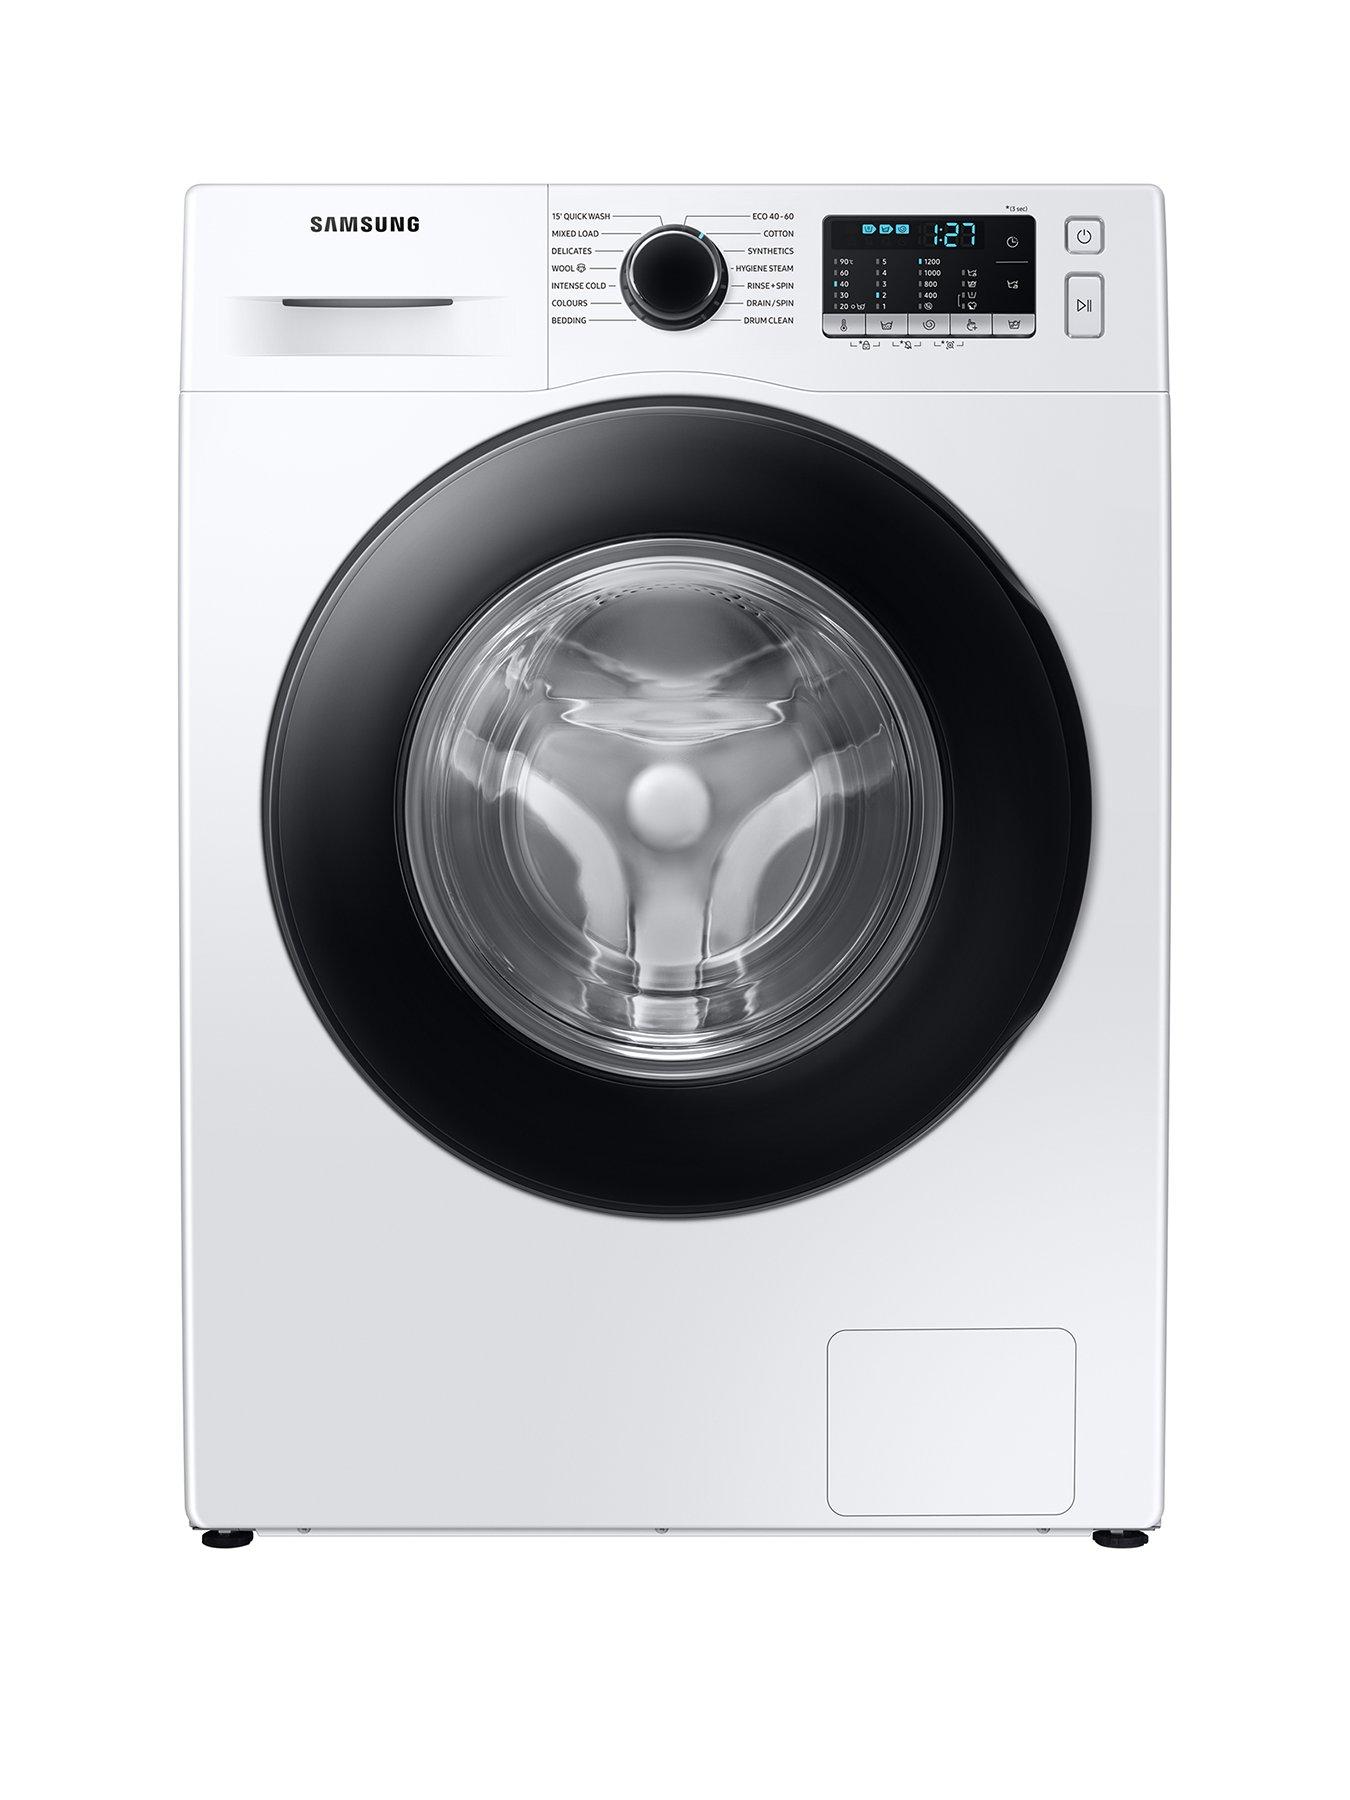 Samsung Series 5 Ww11Bga046Ae/Eu Spacemax Washing Machine - 11Kg Load 1400 Spin A Rated - White